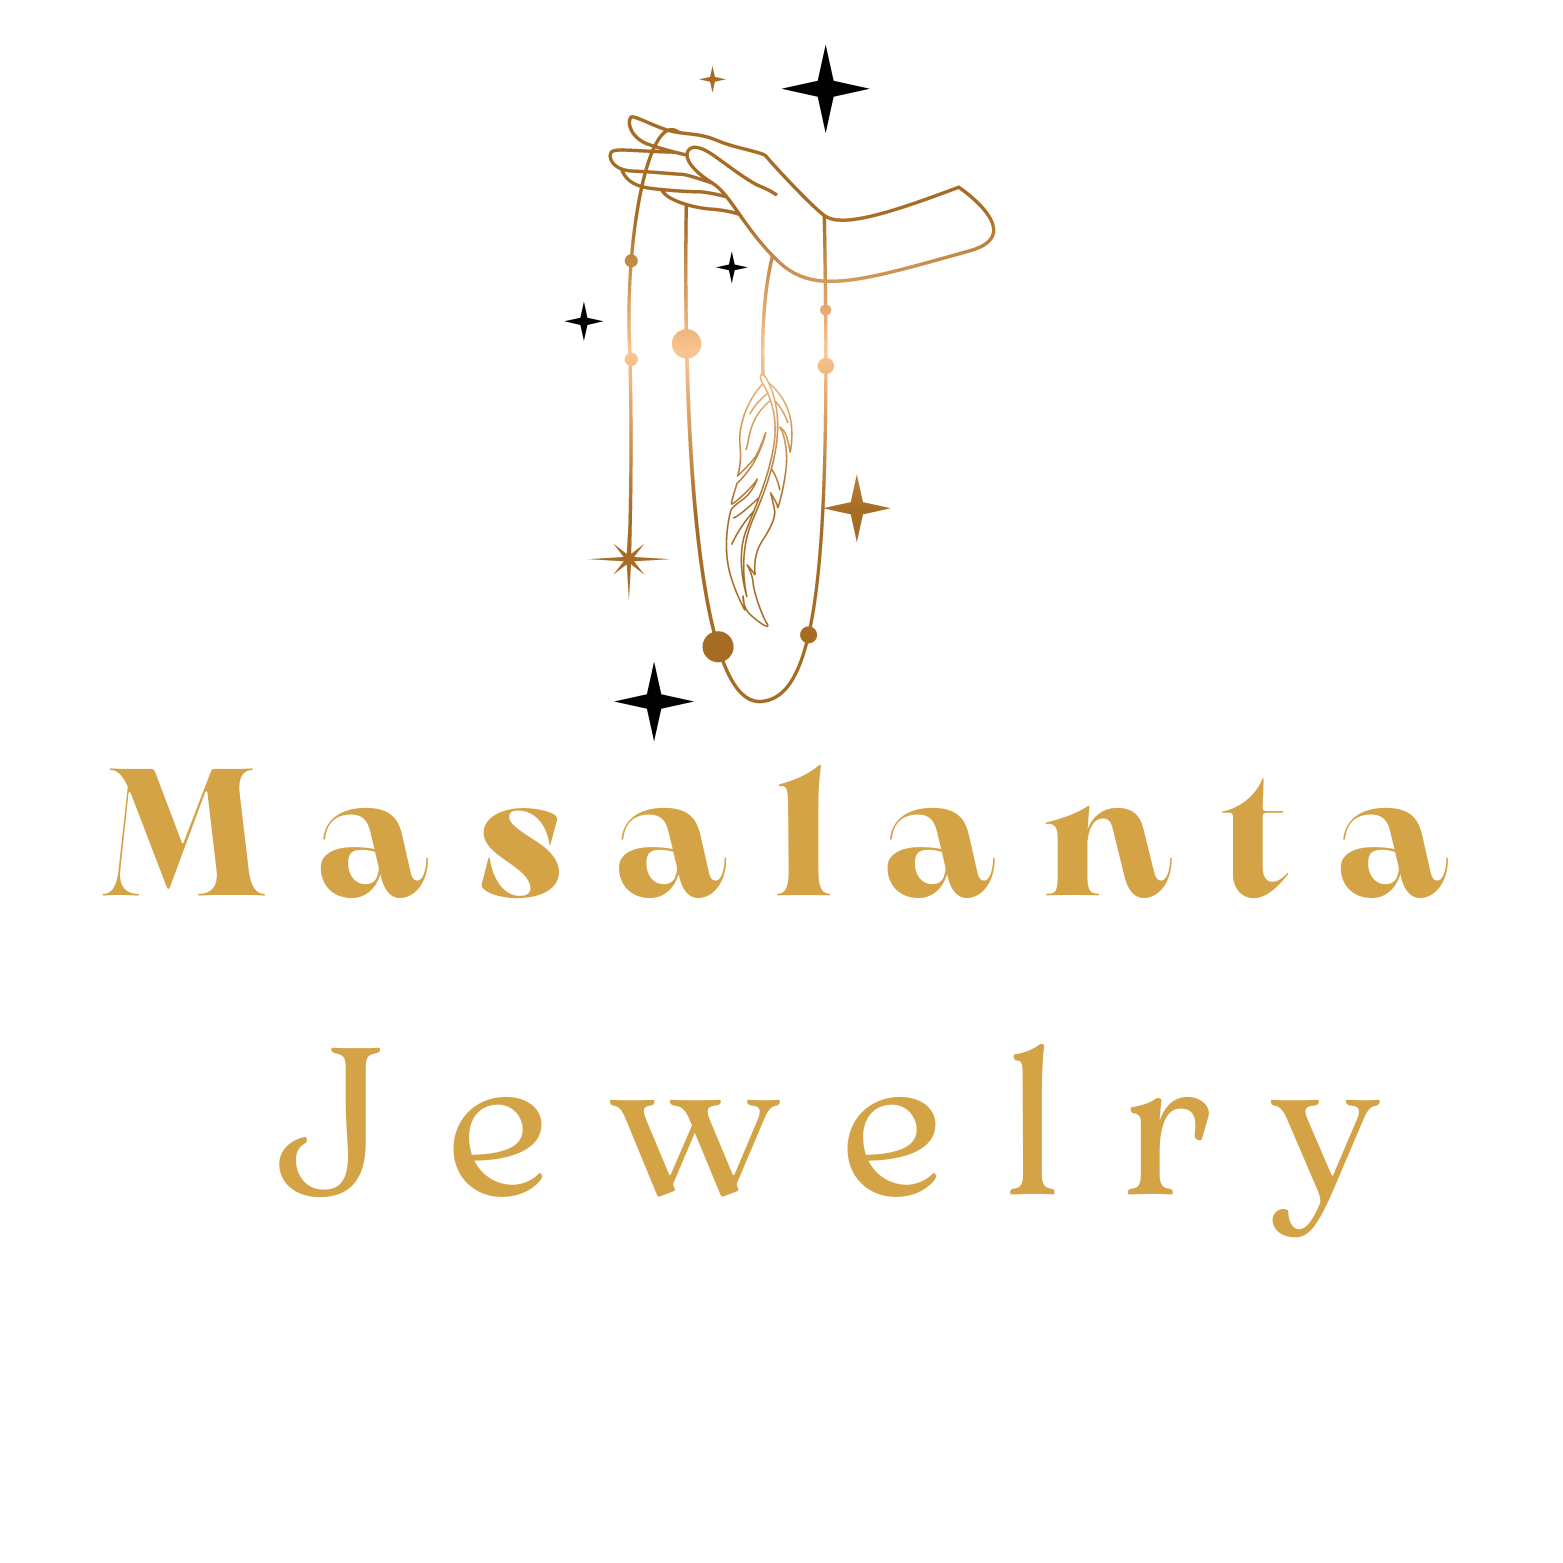 Masalanta Jewelry